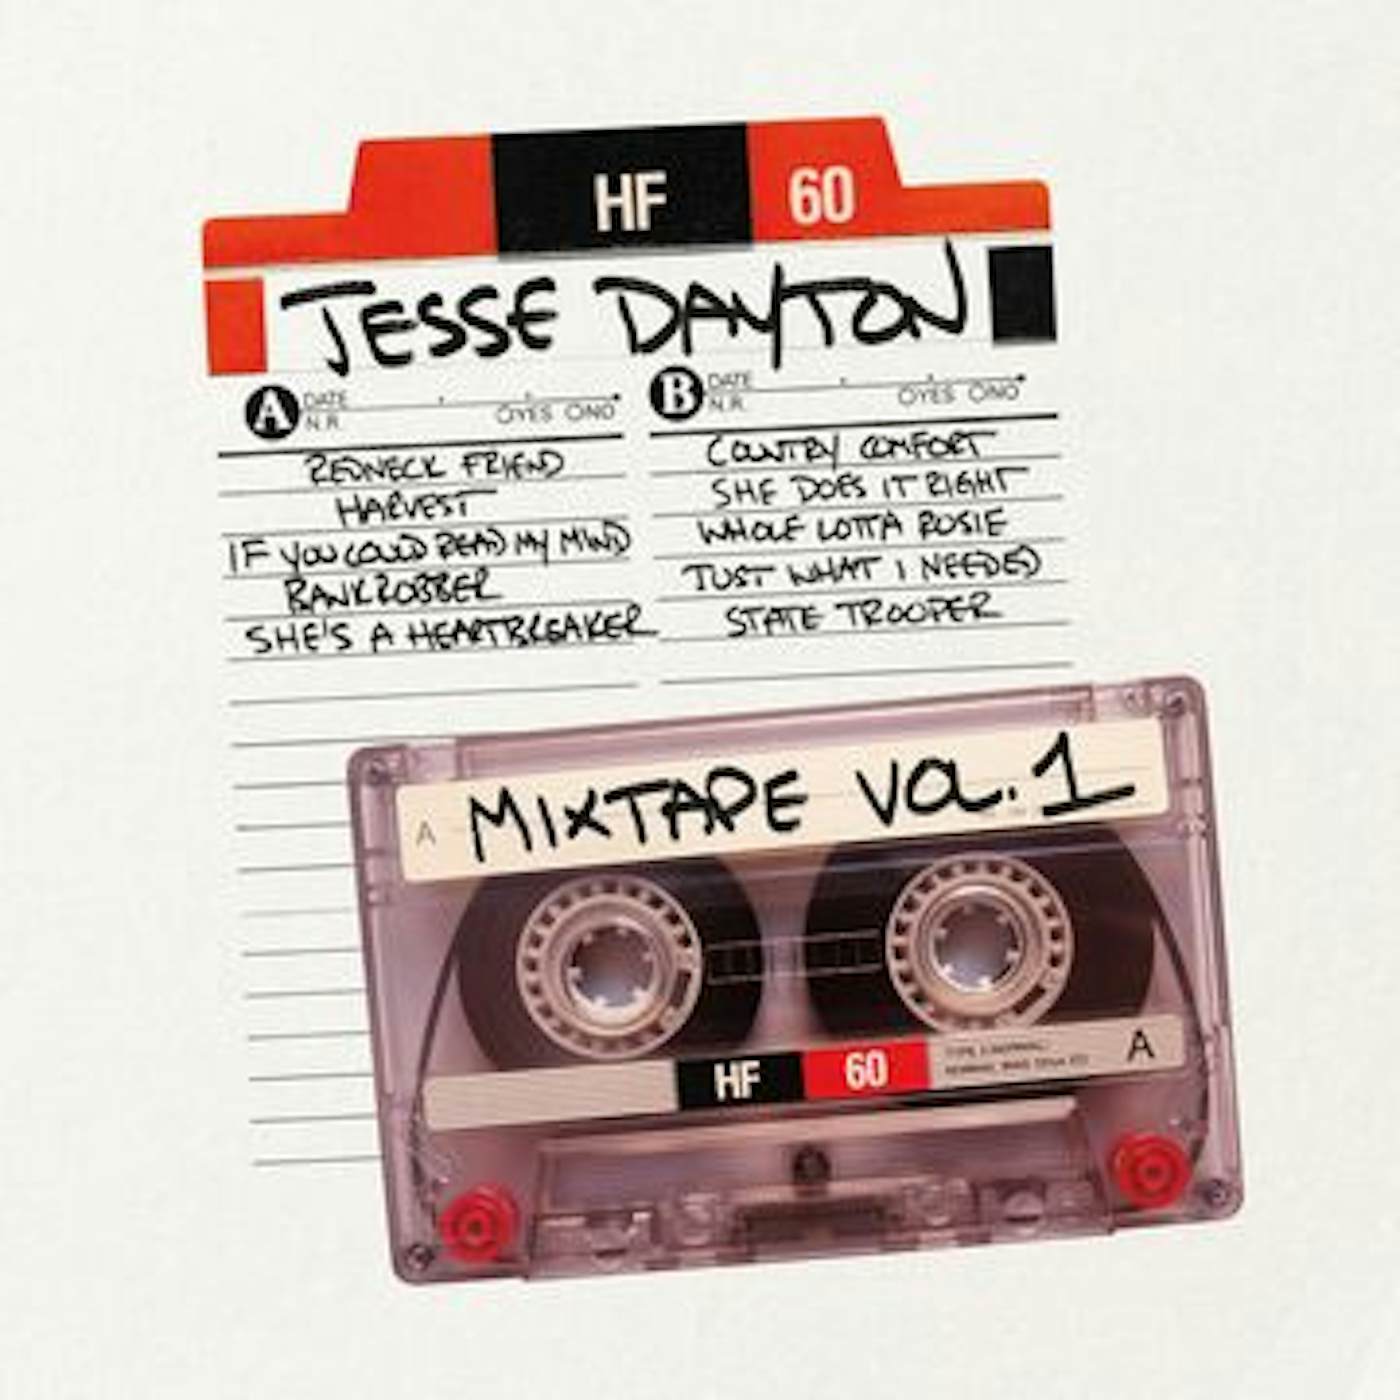 Jesse Dayton Mixtape Volume 1 Vinyl Record